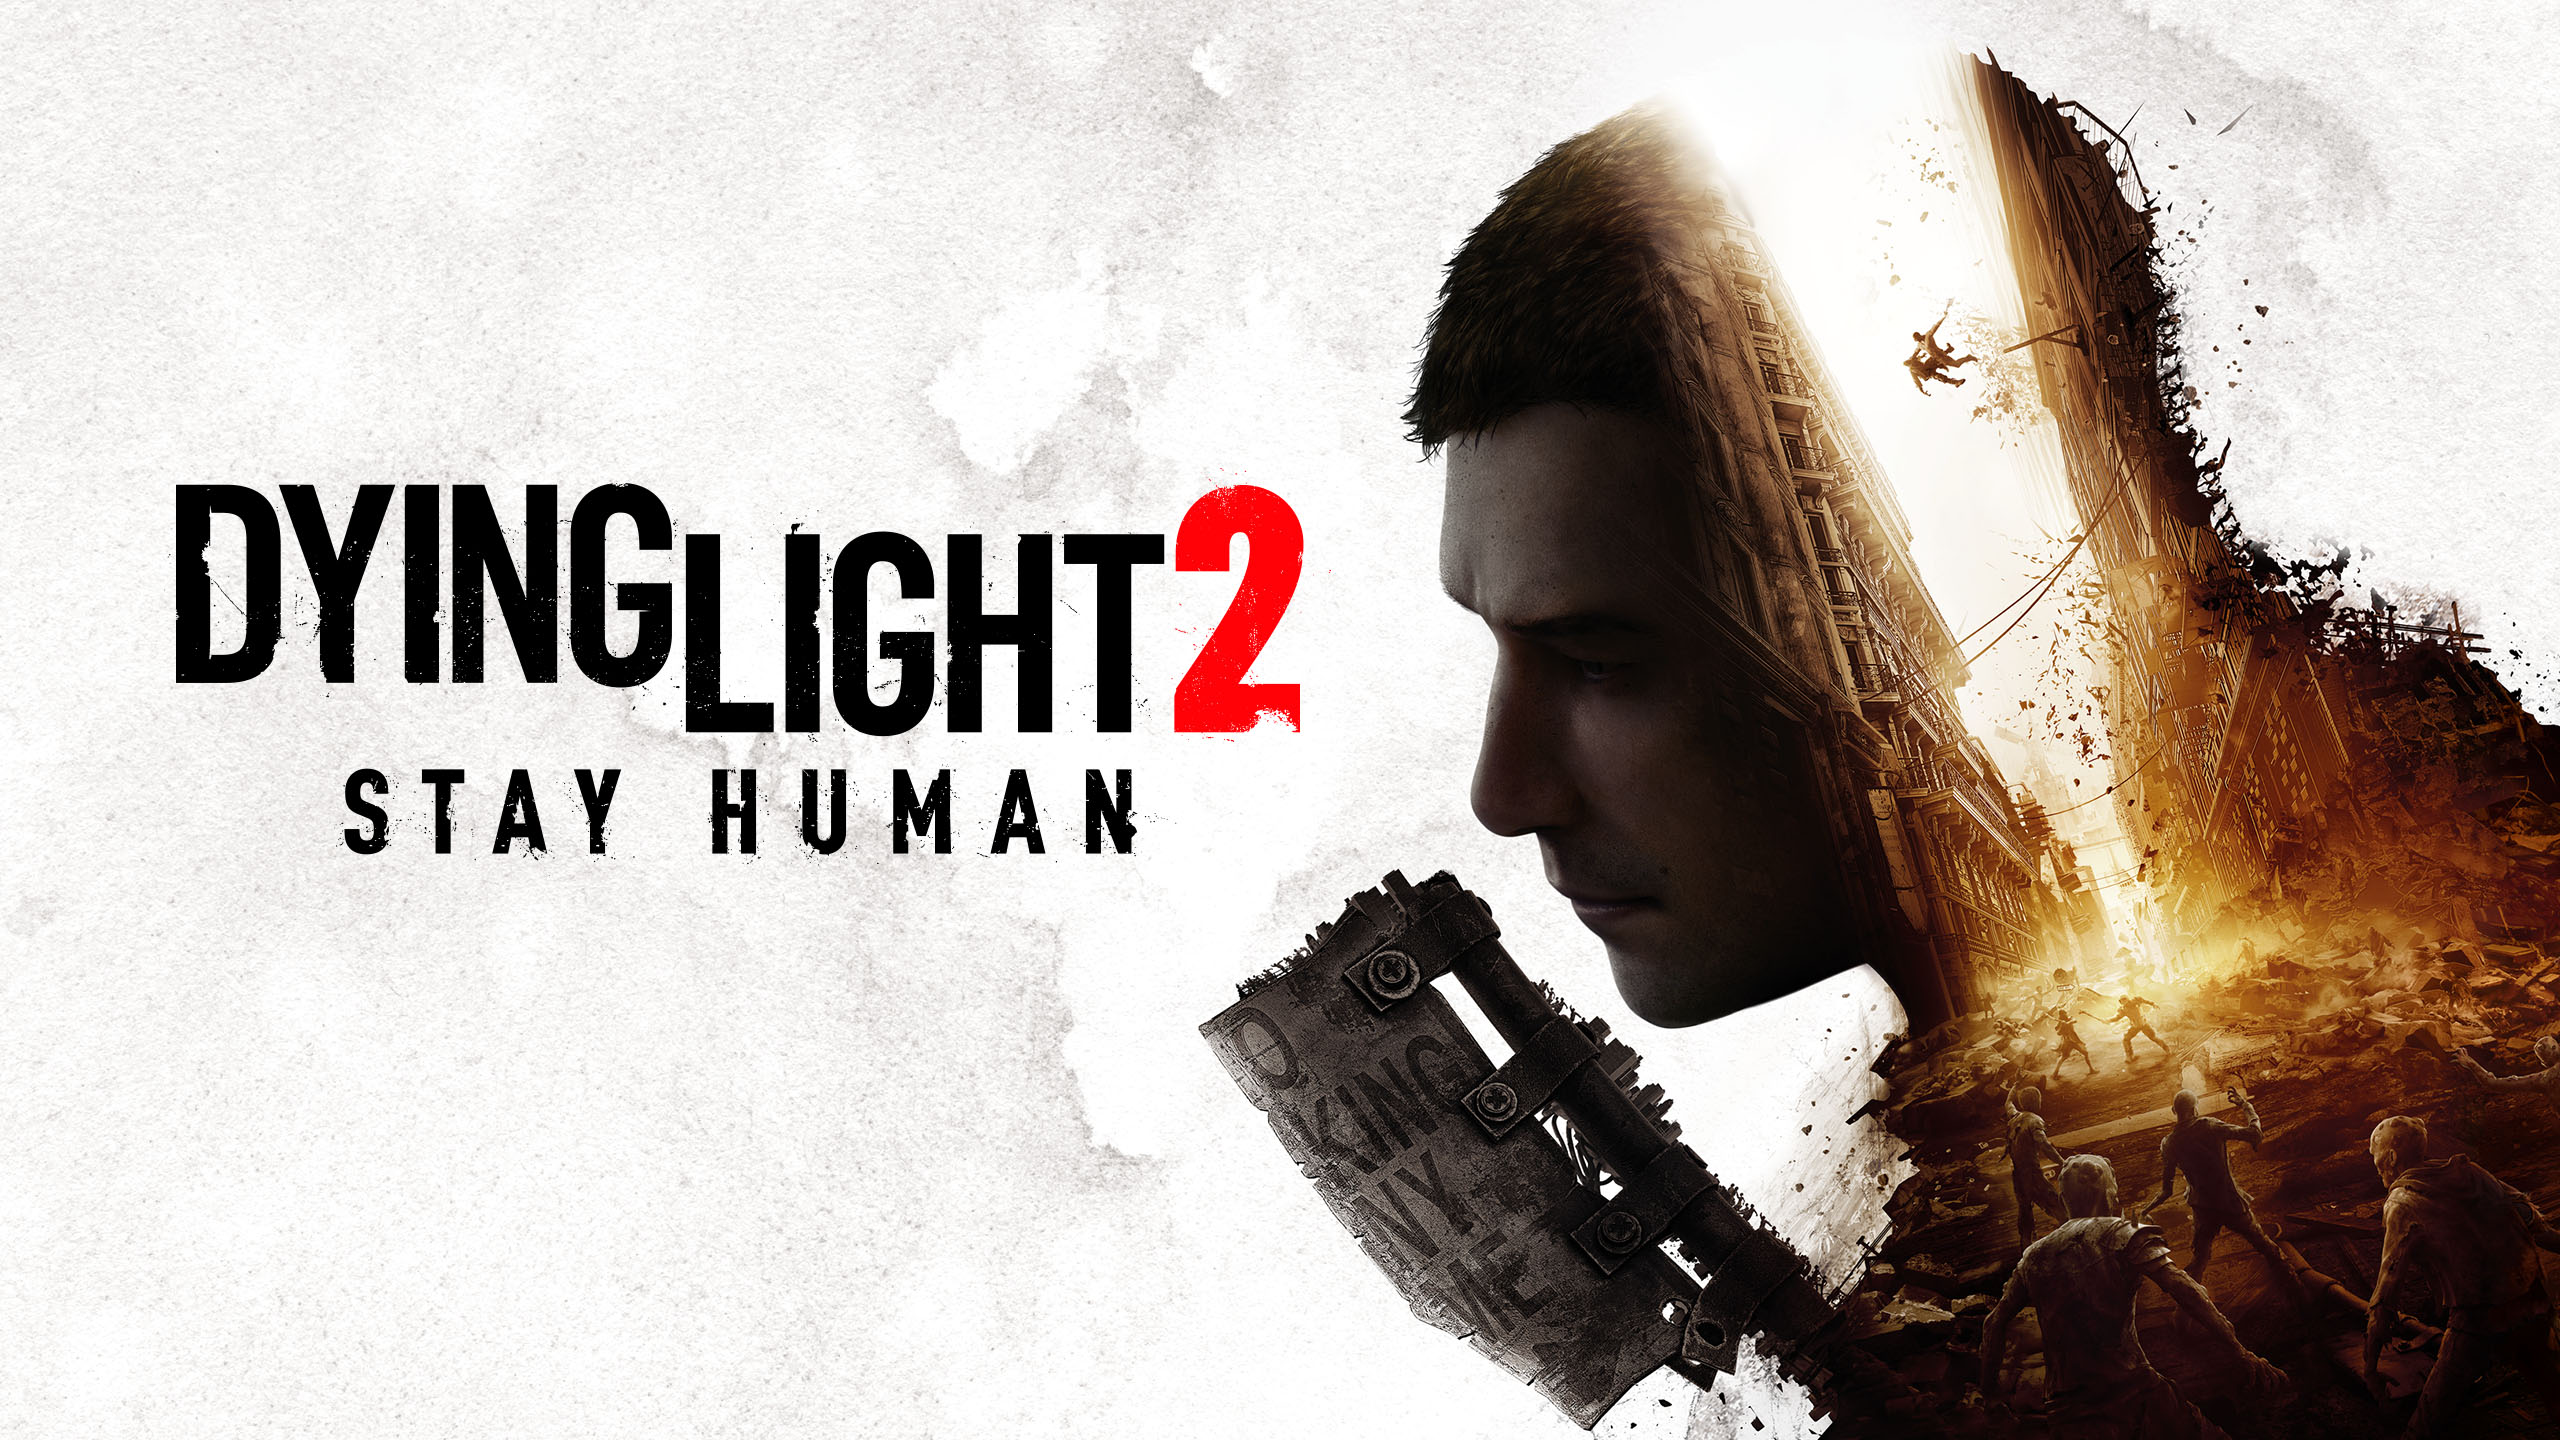 Dying Light 2 Stay Human وصلت إلى أكثر من 3 مليون لاعب